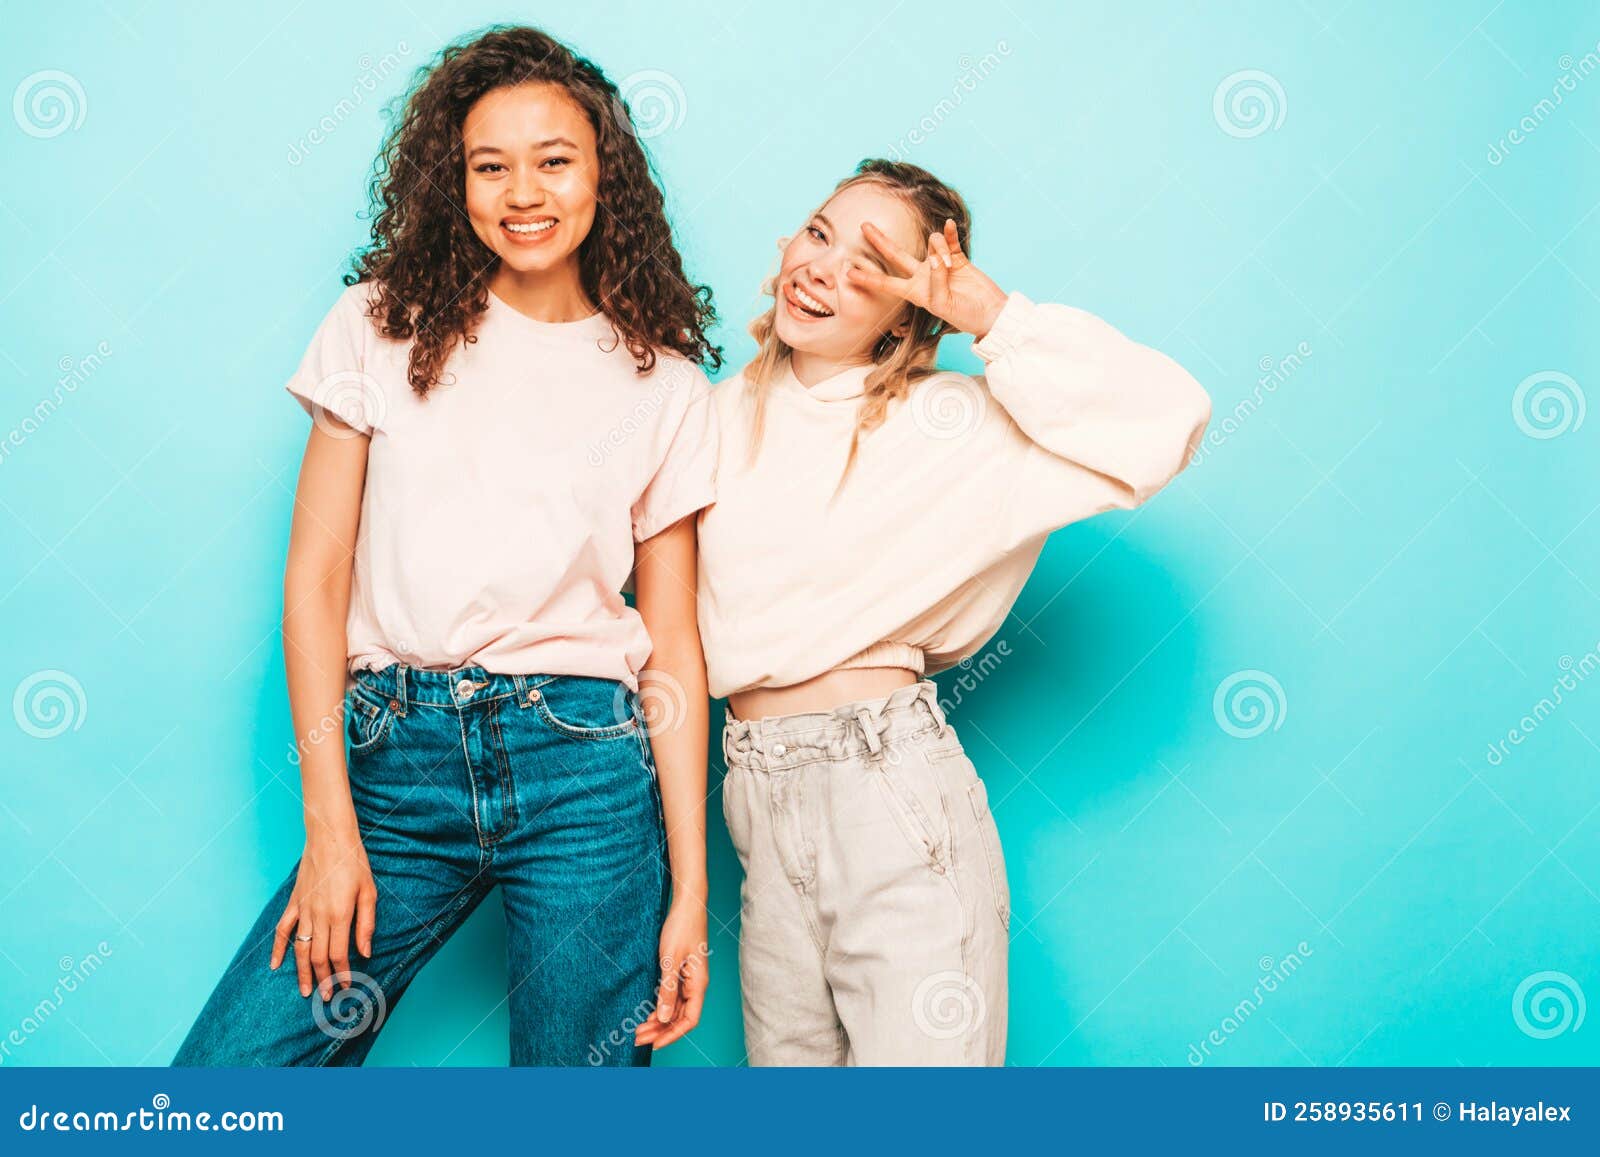 Two Young Beautiful Women Posing in Studio Stock Image - Image of ...